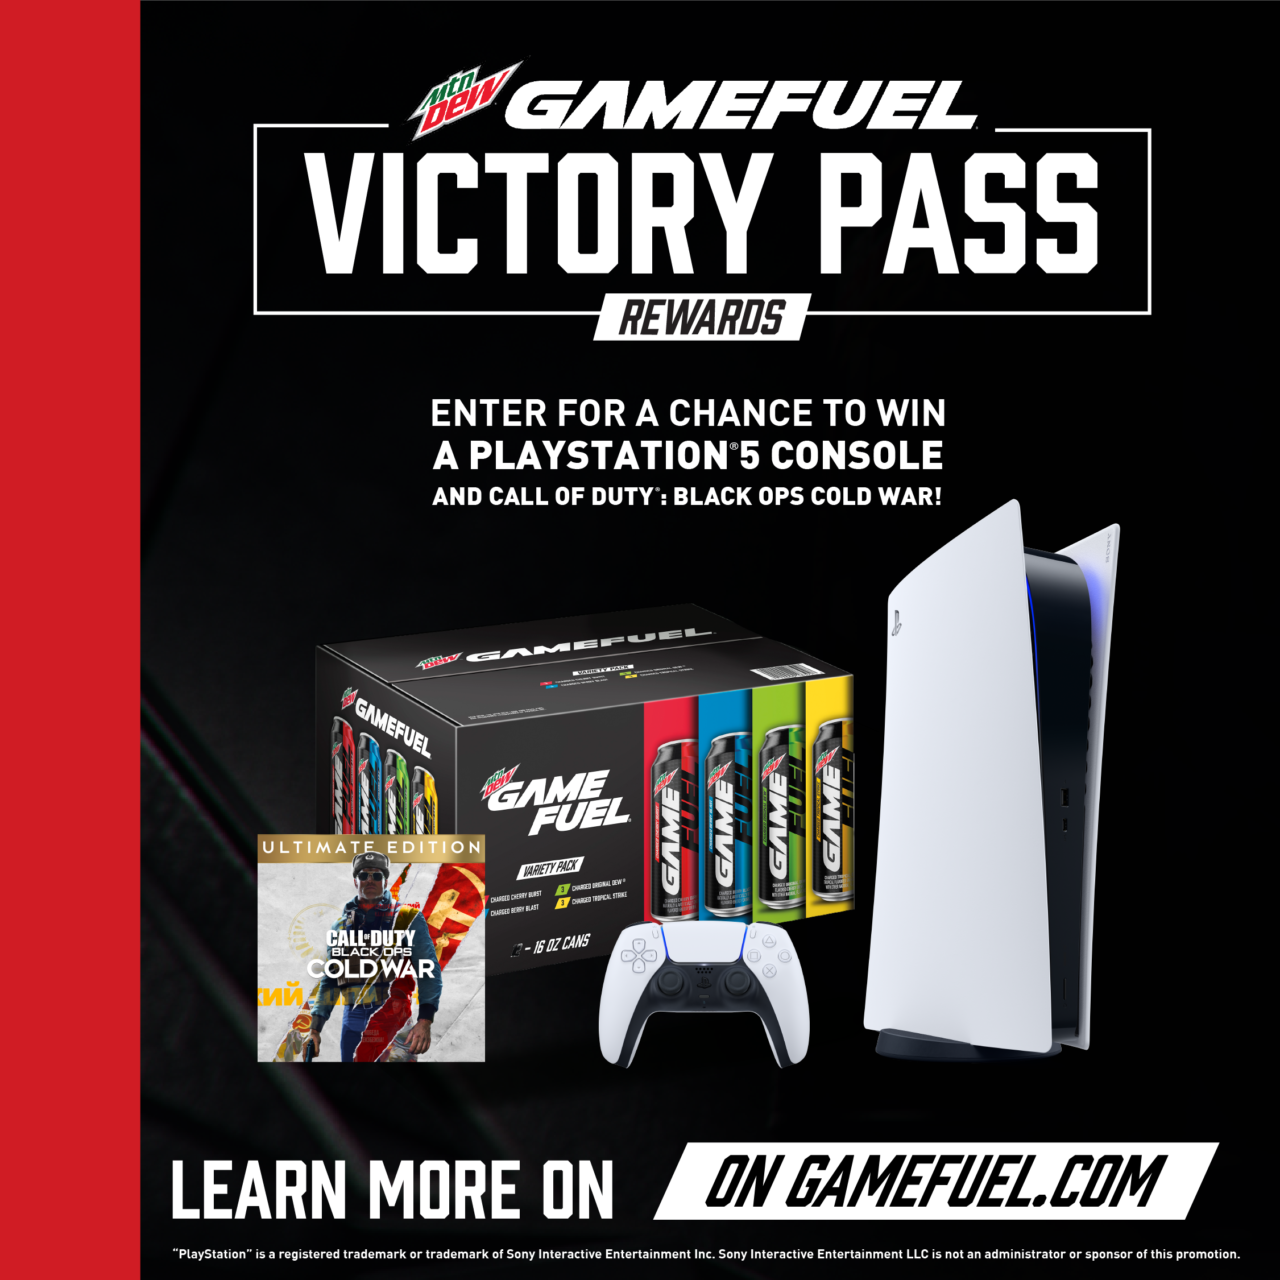 Gamefuel Victory Pass image (Mtn Dew)